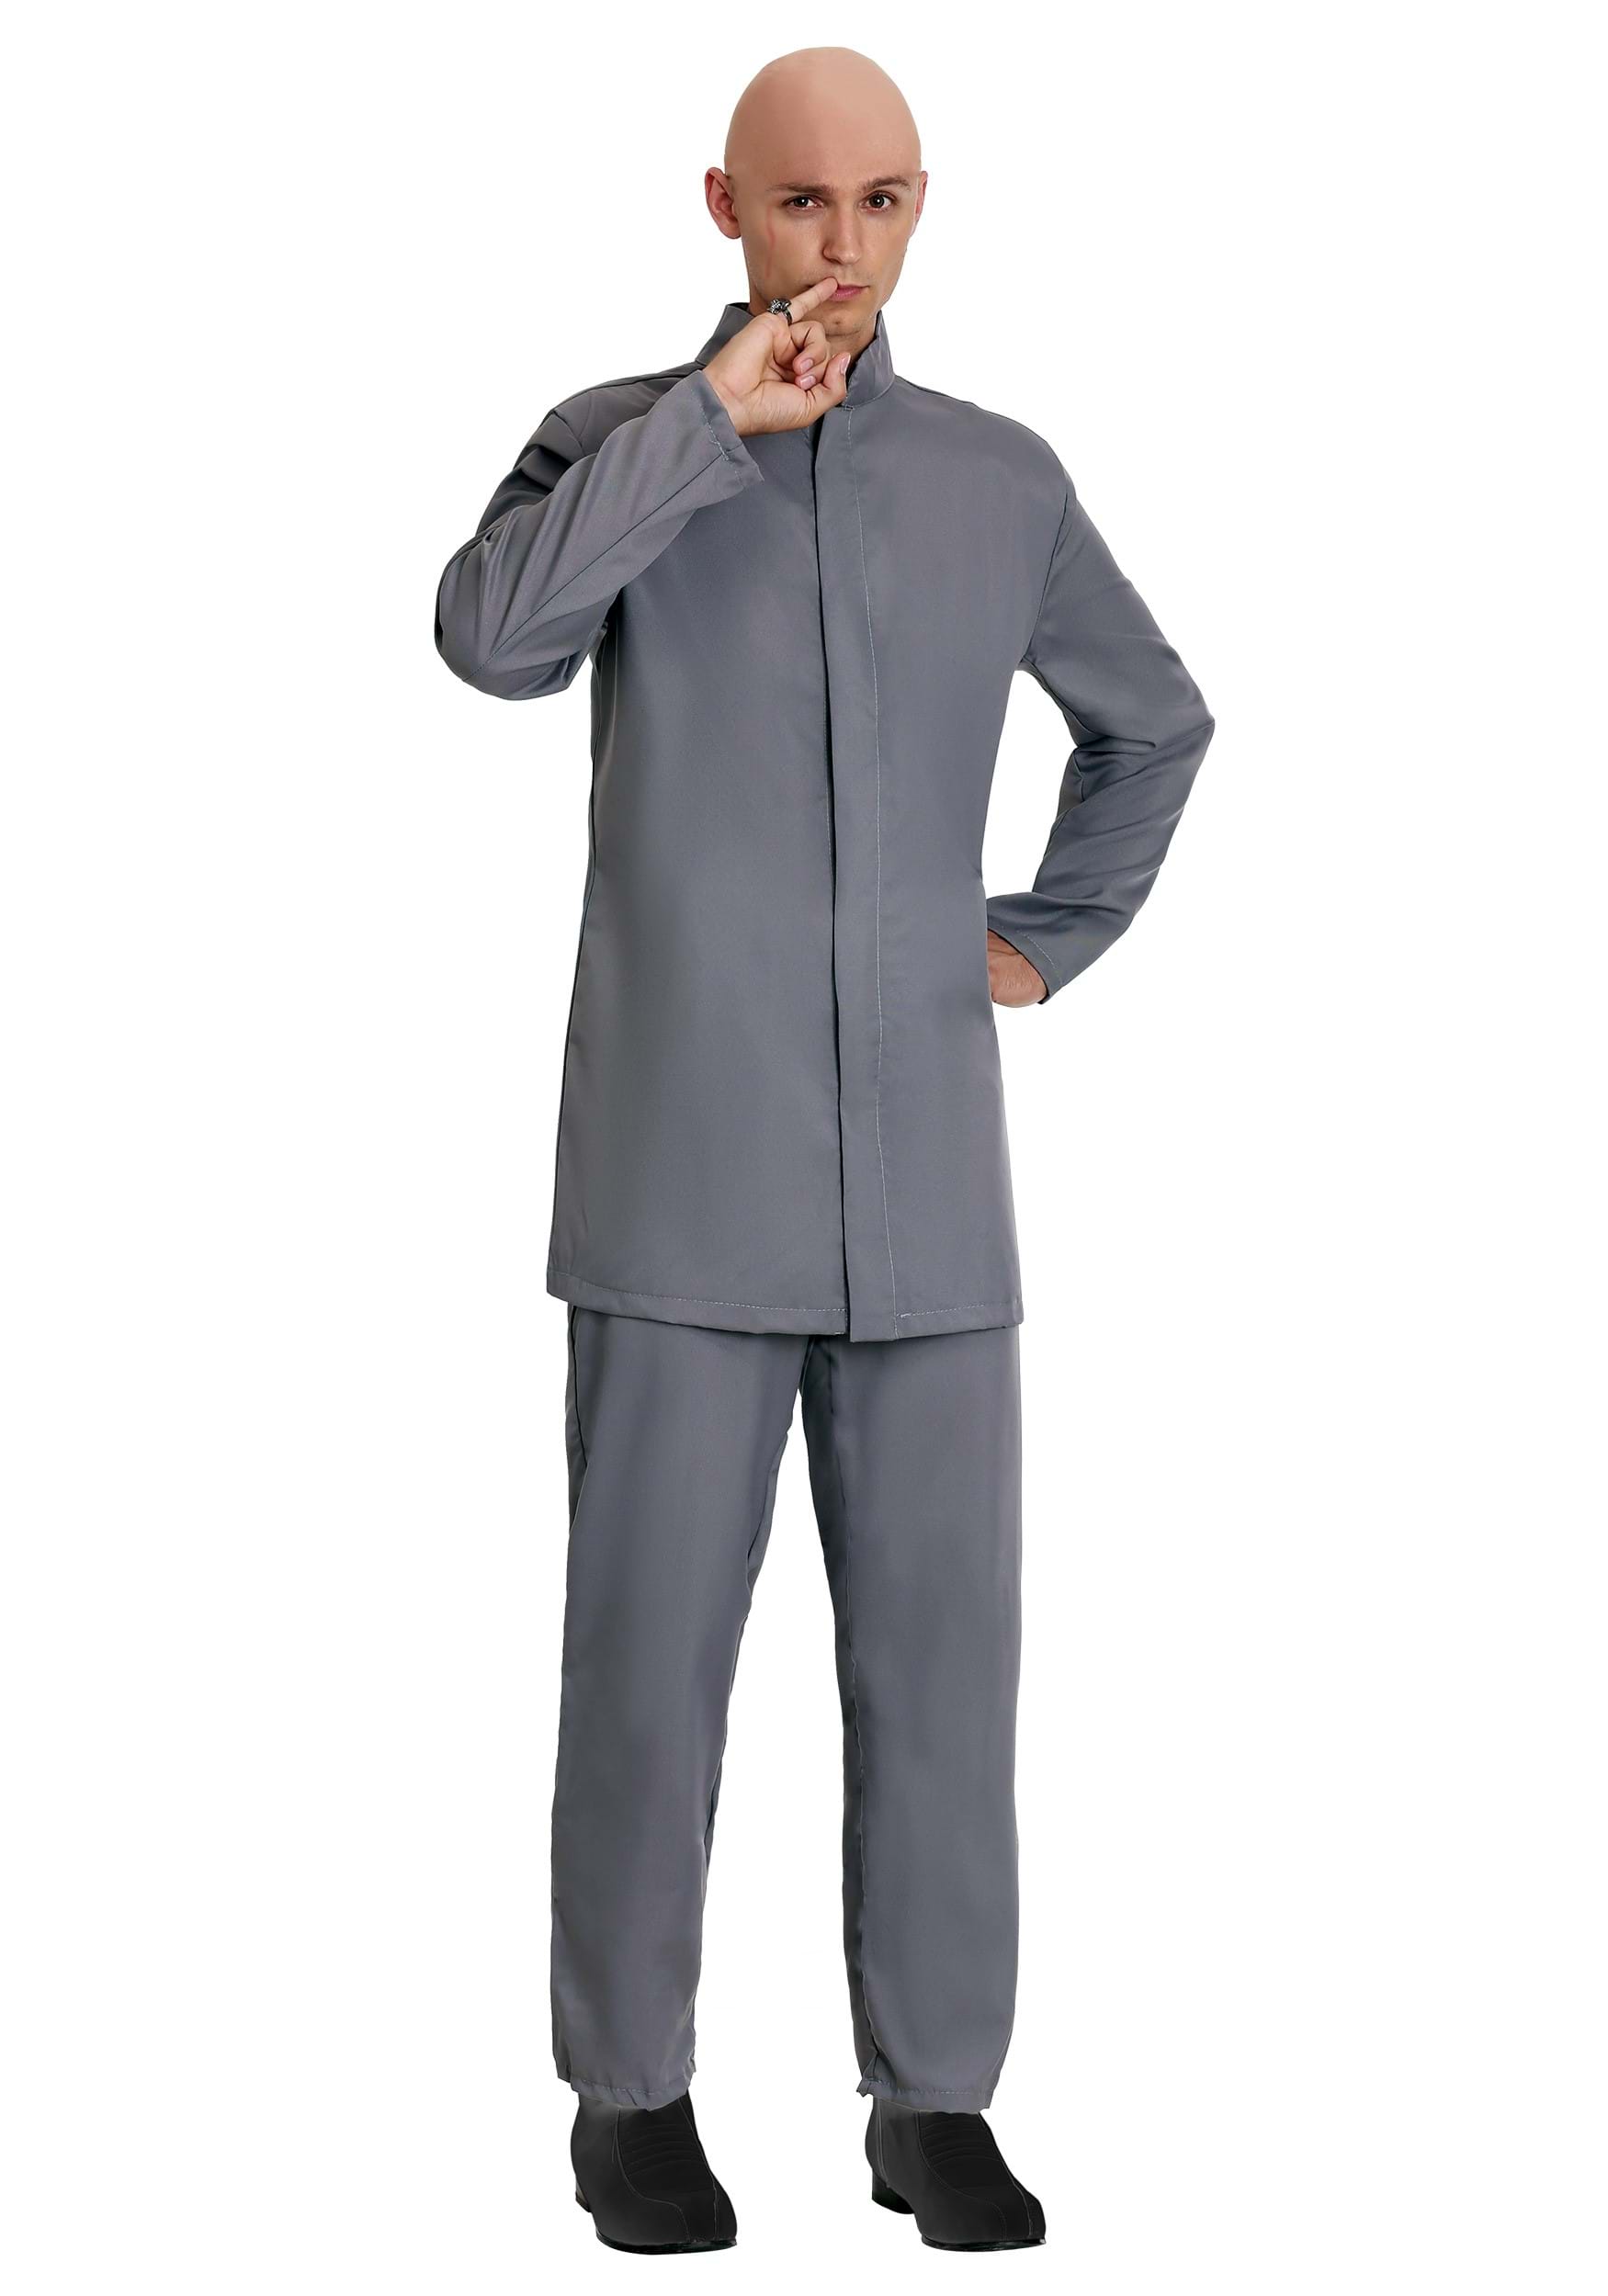 Photos - Fancy Dress Deluxe FUN Costumes  Gray Suit Costume for Men | Austin Powers Costumes Gra 